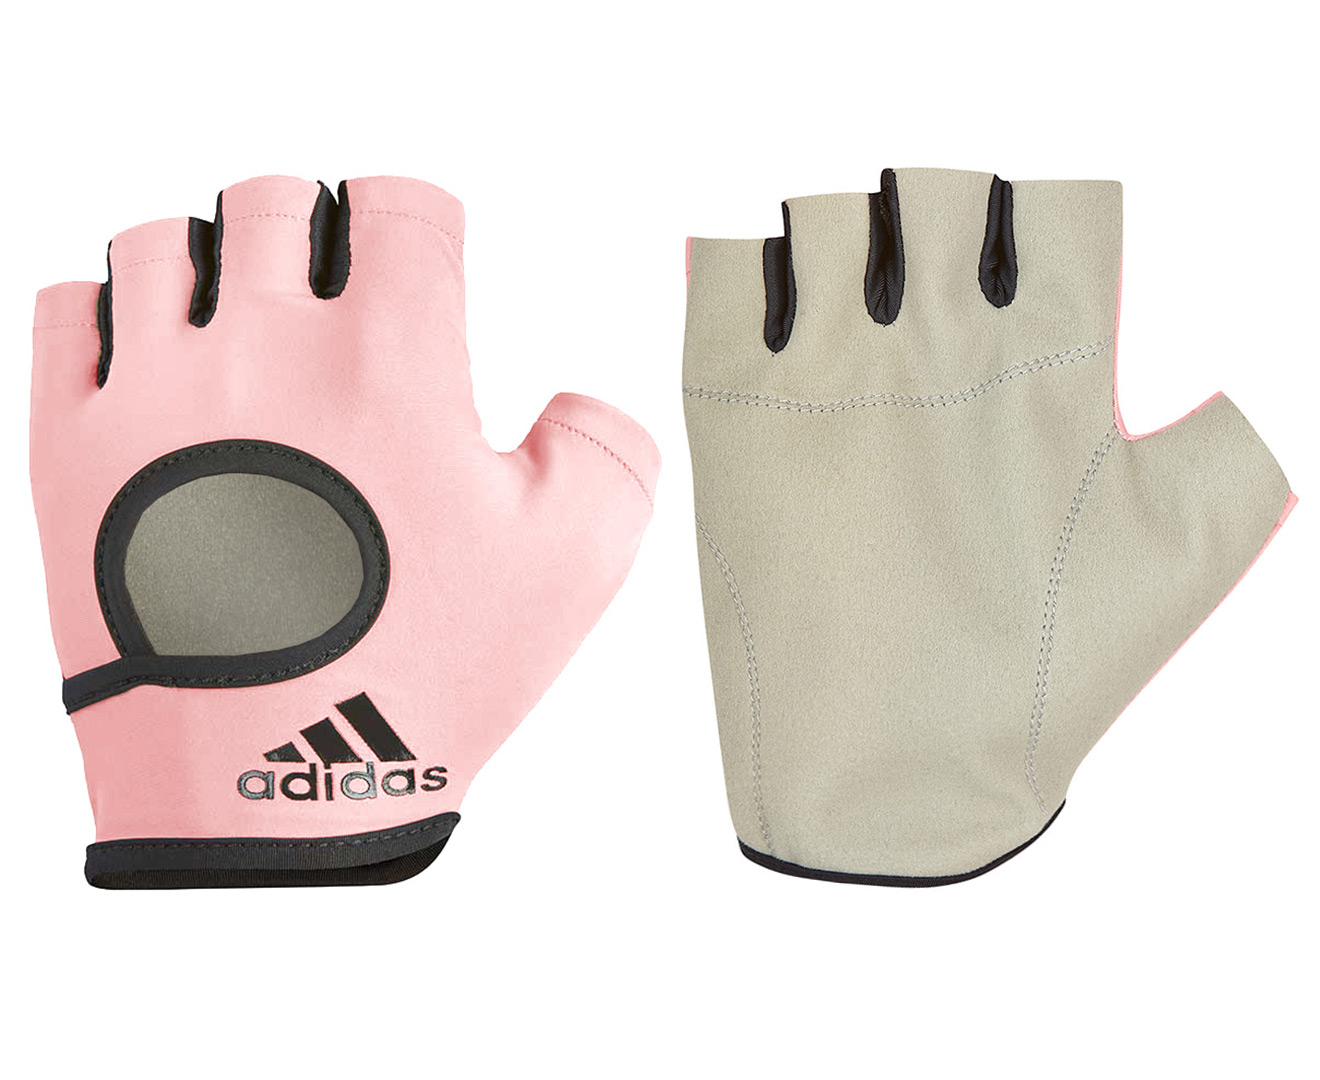 Adidas Women's Weight/Strength Gloves Pink | Catch.com.au